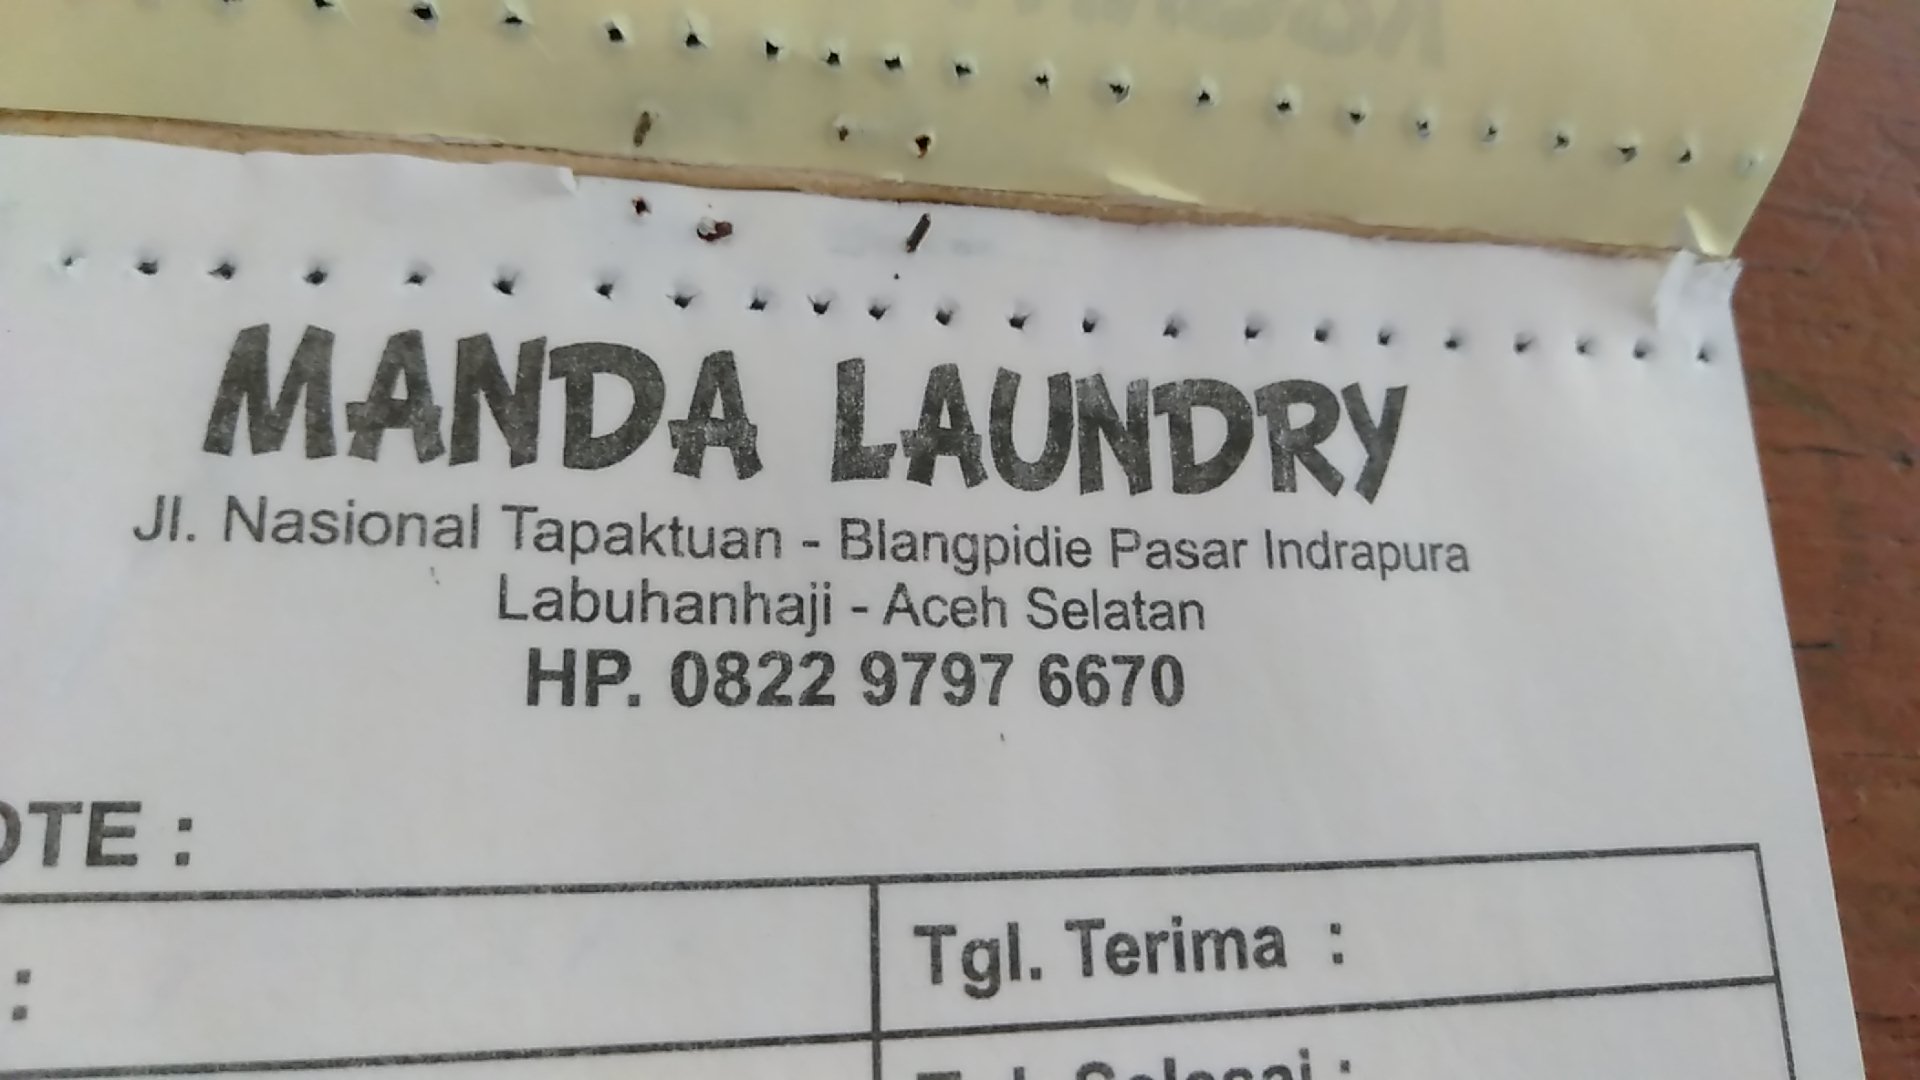 Manda Laundry Photo